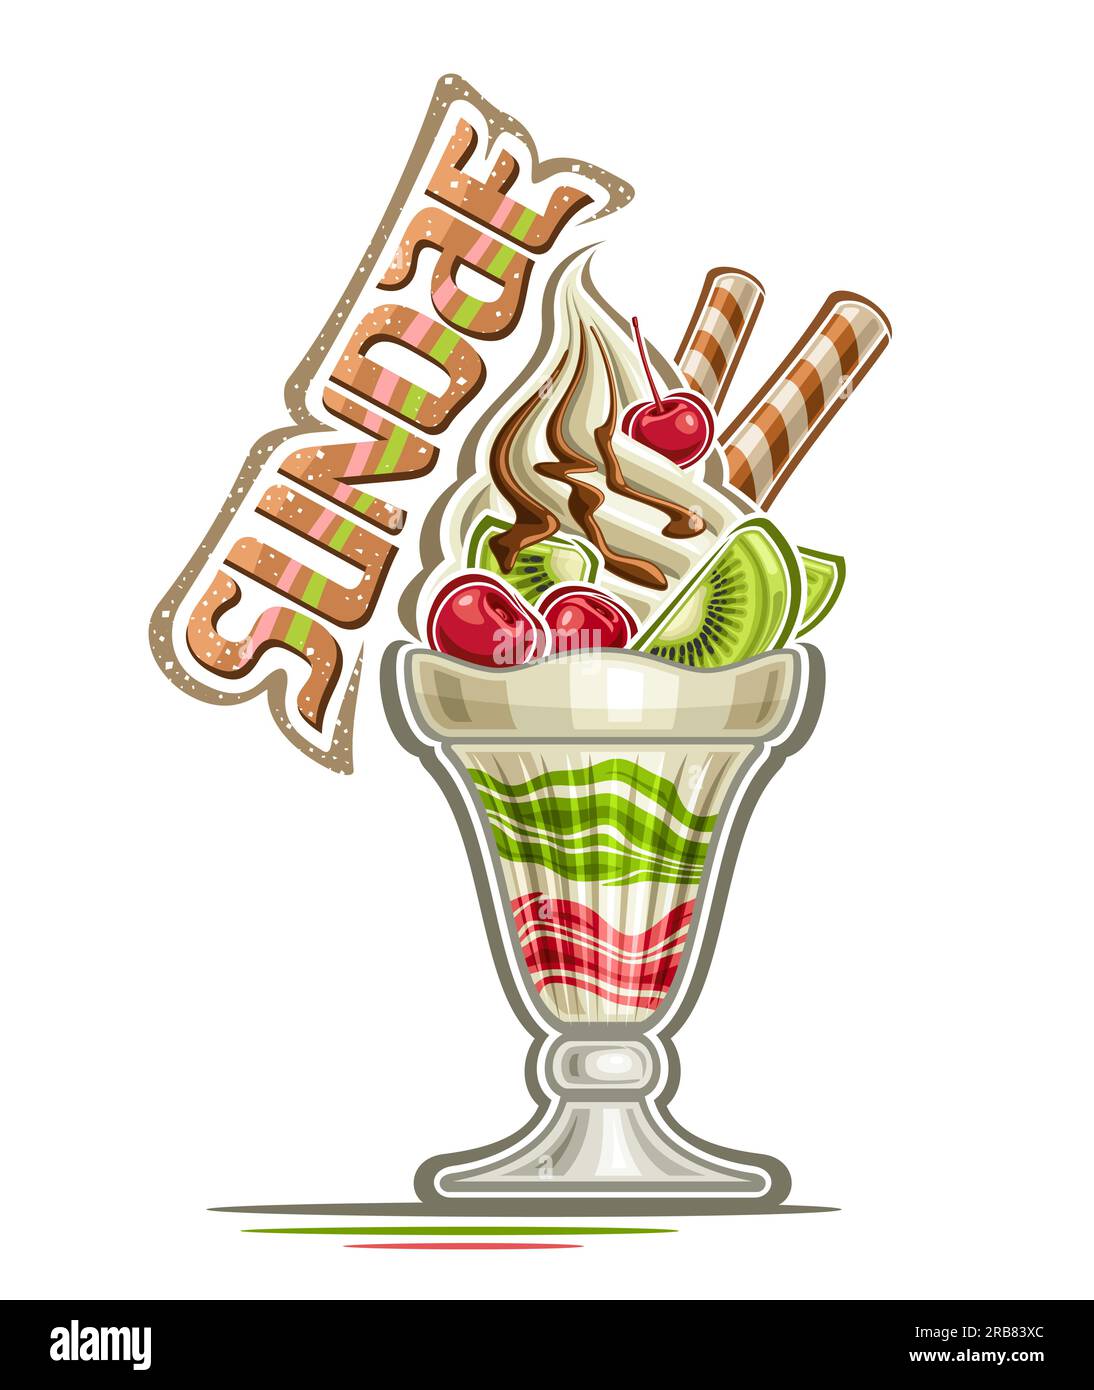 Vector logo for Sundae, decorative poster with illustration of sundae ice cream with layered colorful jam decorated waffle rolls, sliced kiwi fruits, Stock Vector